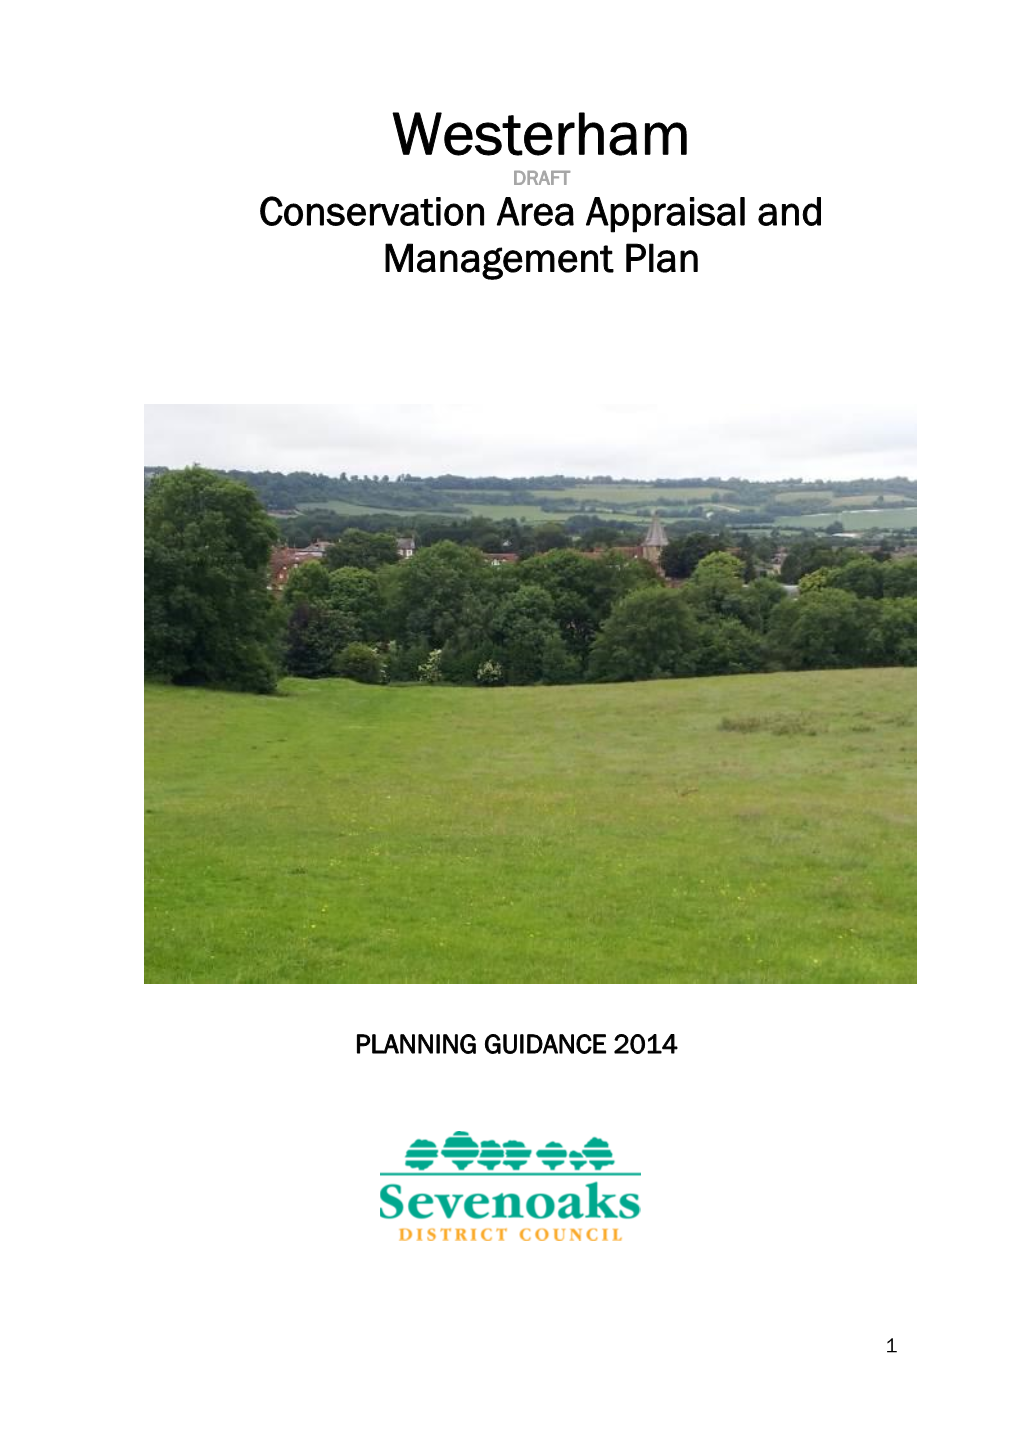 Westerham DRAFT Conservation Area Appraisal and Management Plan